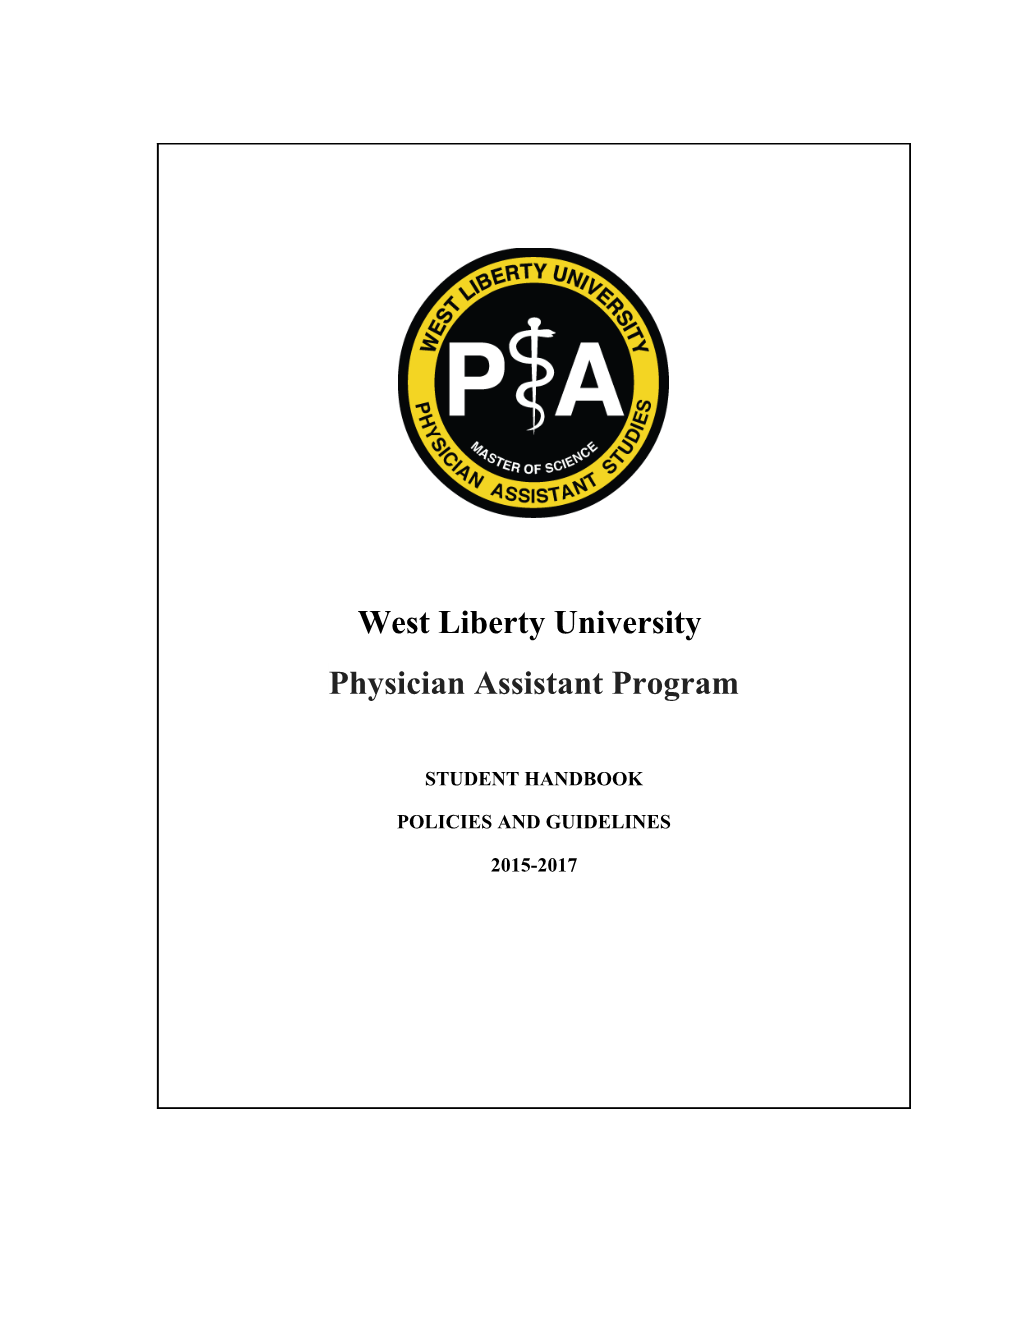 West Liberty University s1